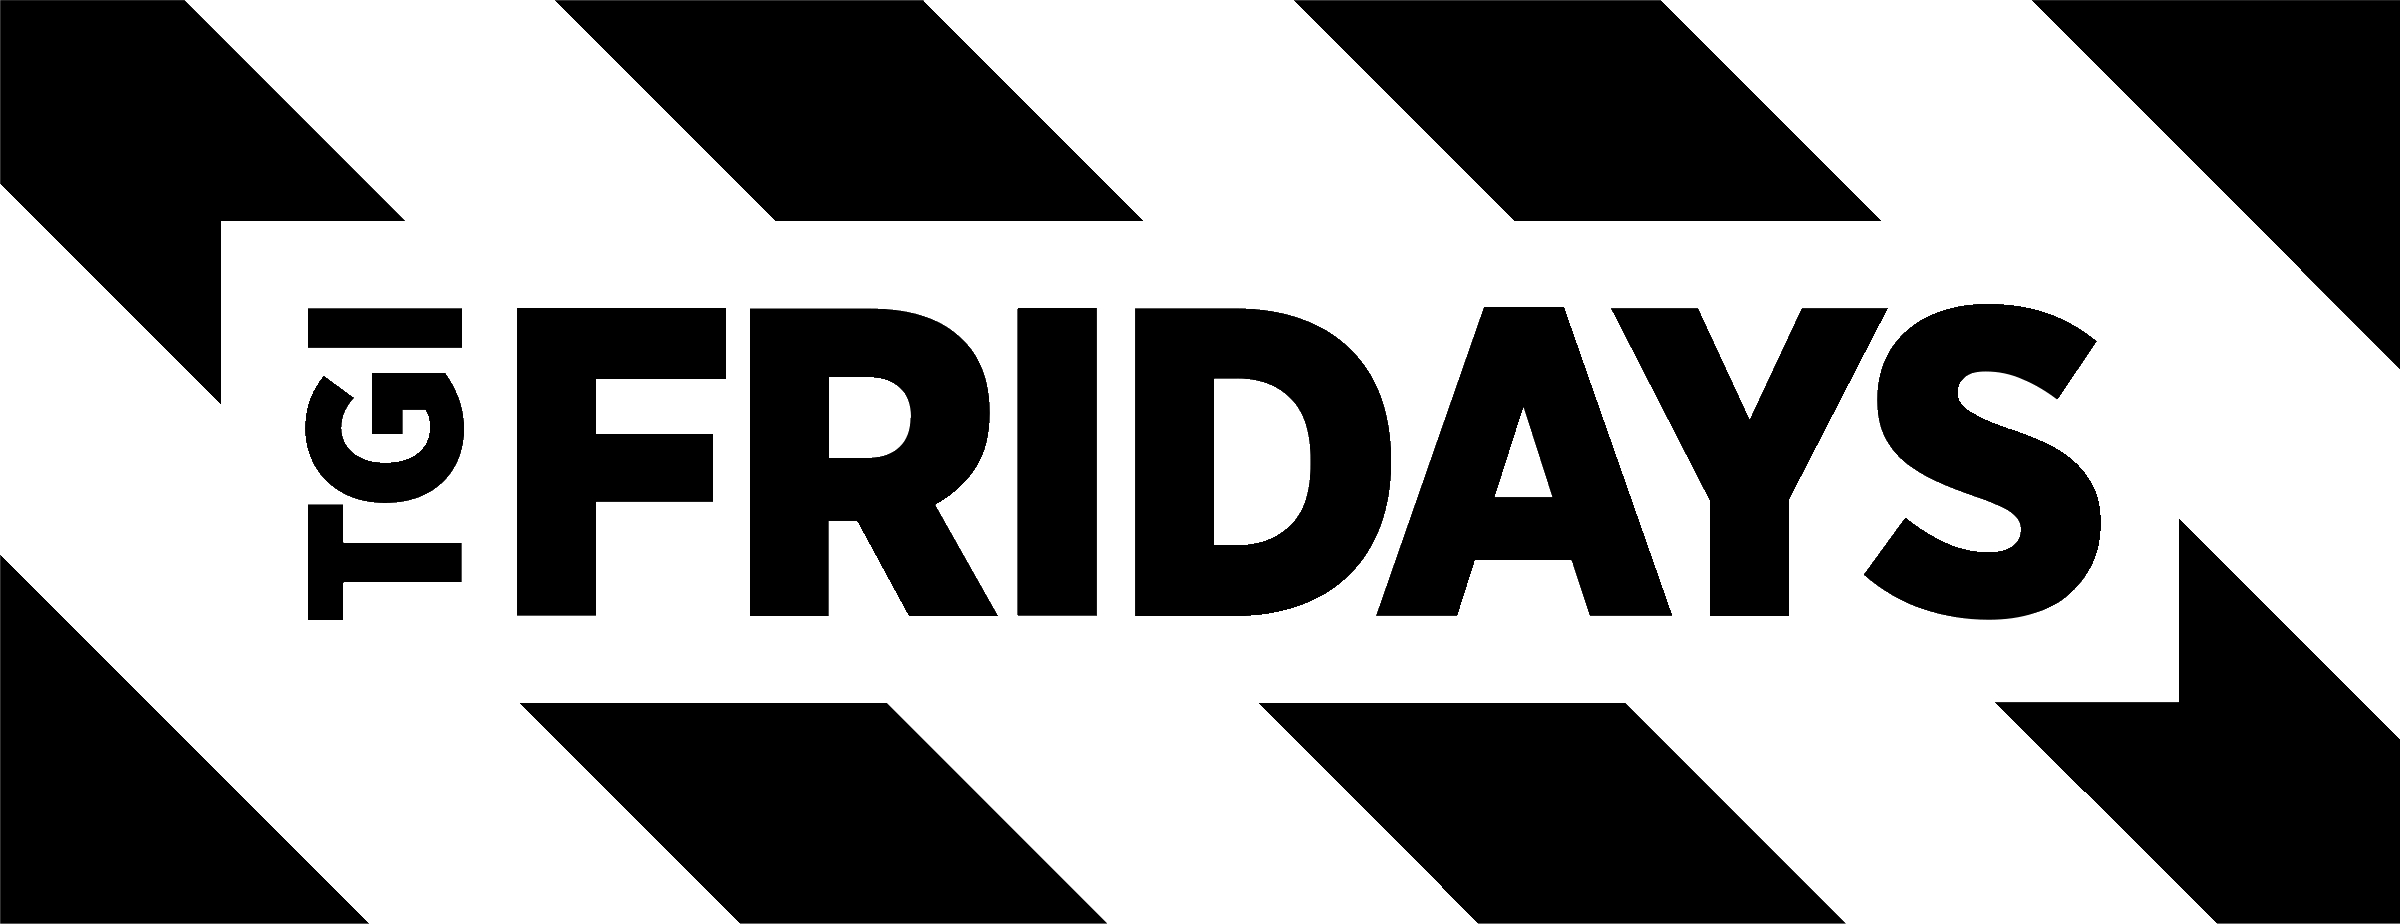 Tgifriday's Logo - TGI Fridays Logo PNG Transparent & SVG Vector - Freebie Supply